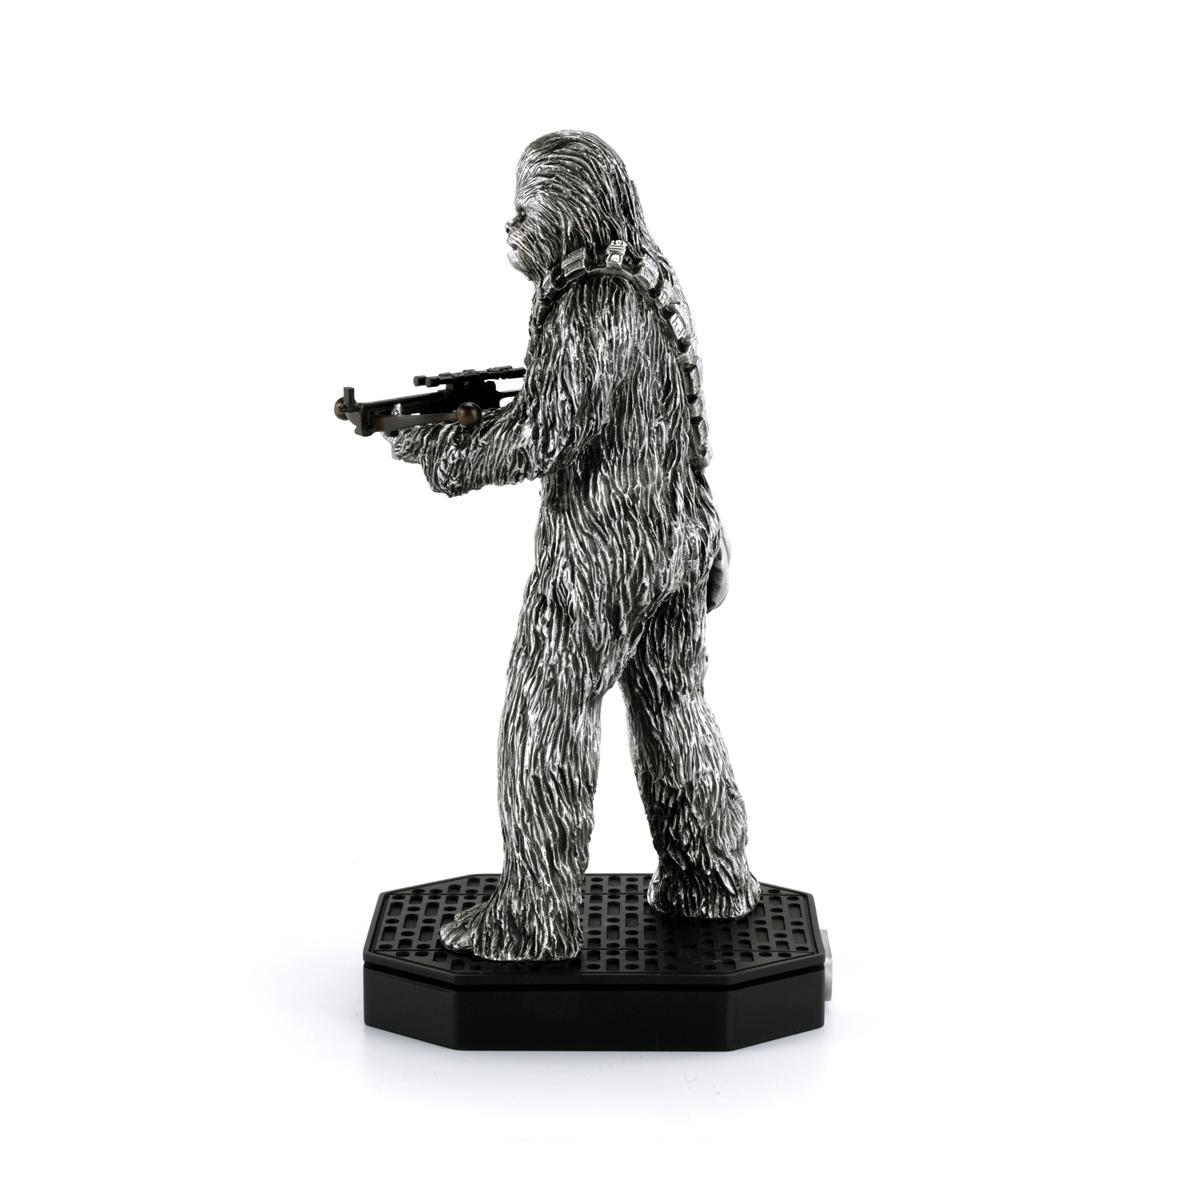 Limited Edition Chewbacca Figurine